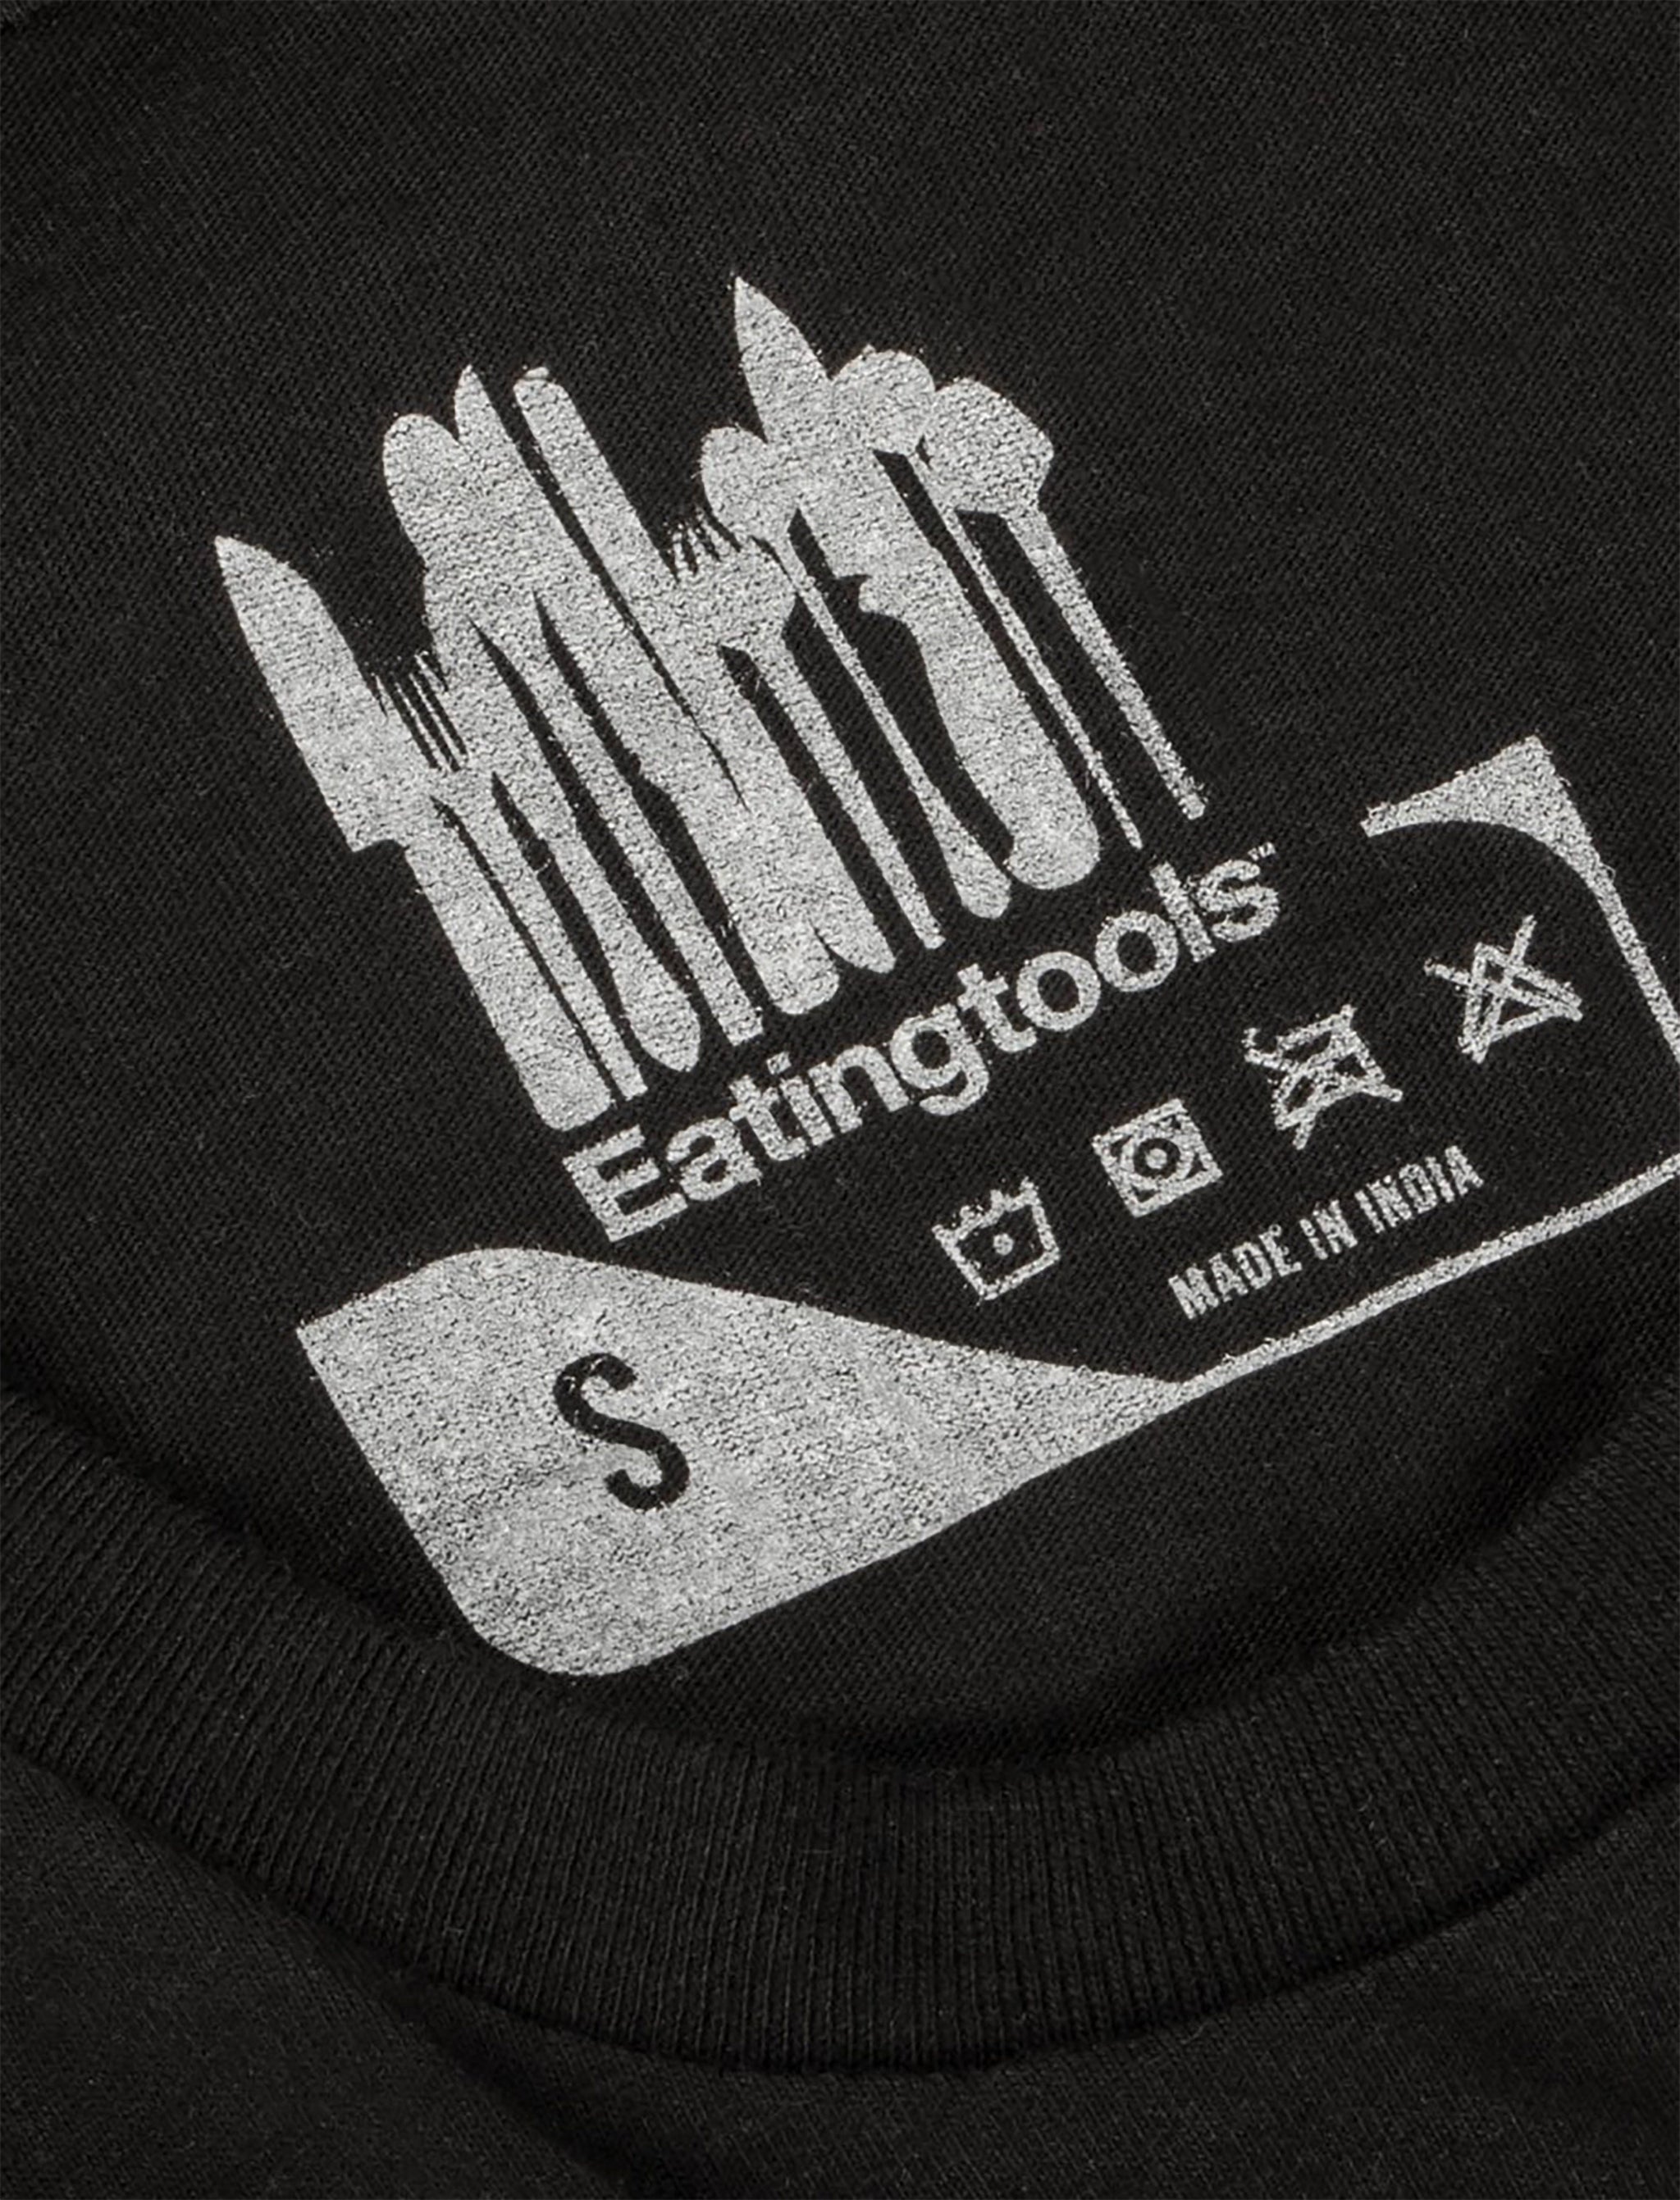 Eatingtools Accessories & Apparel 10th Anniversary T-Shirt